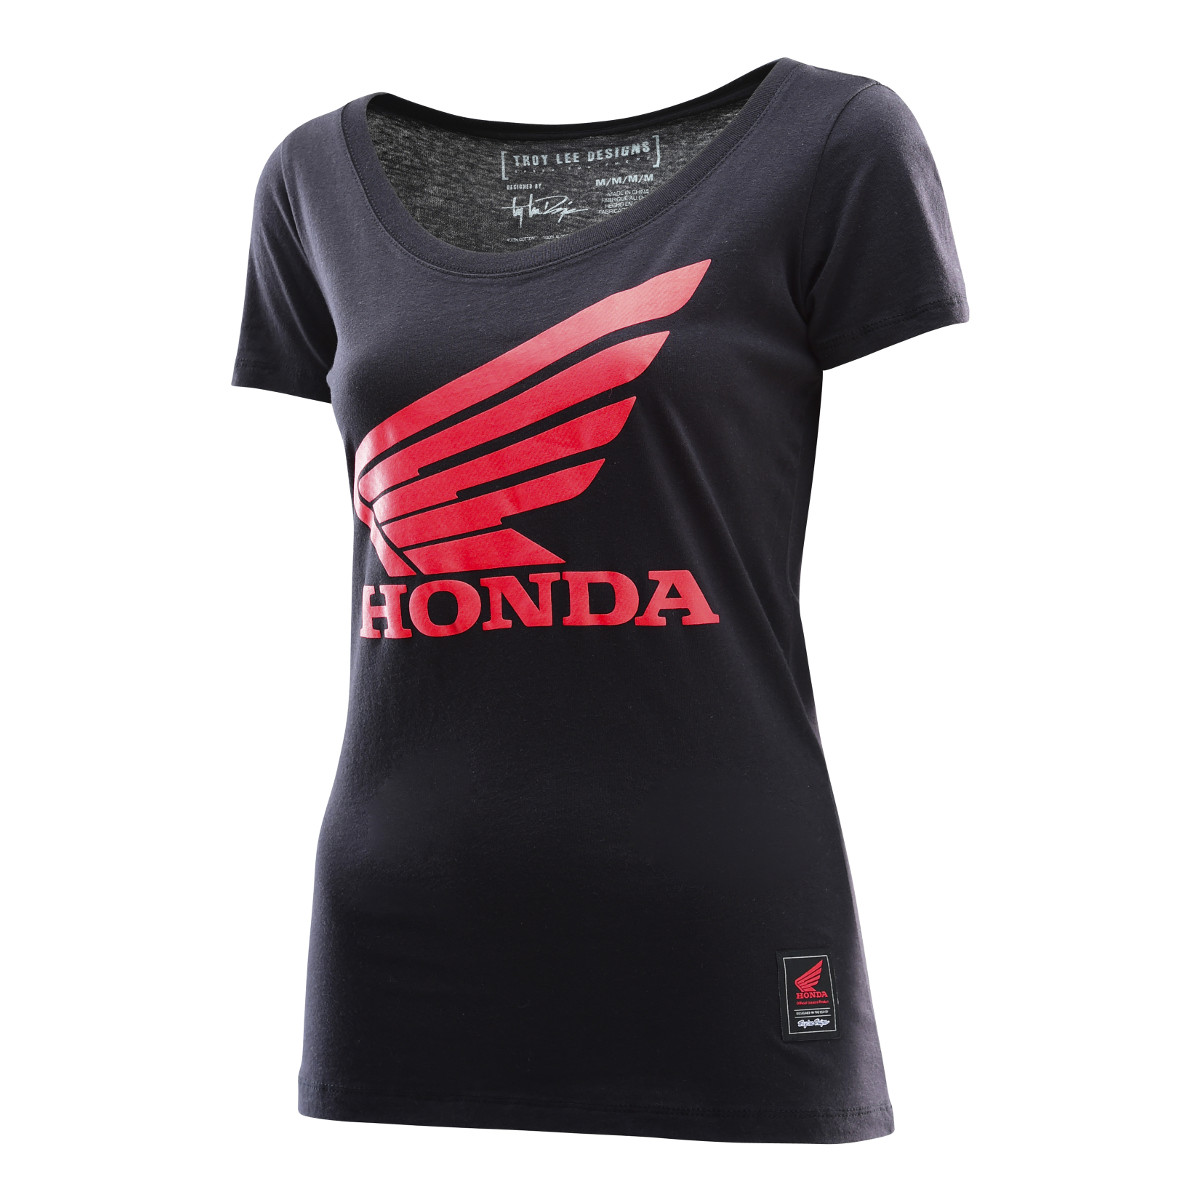 Troy Lee Designs Femme T-Shirt Honda Wing Black